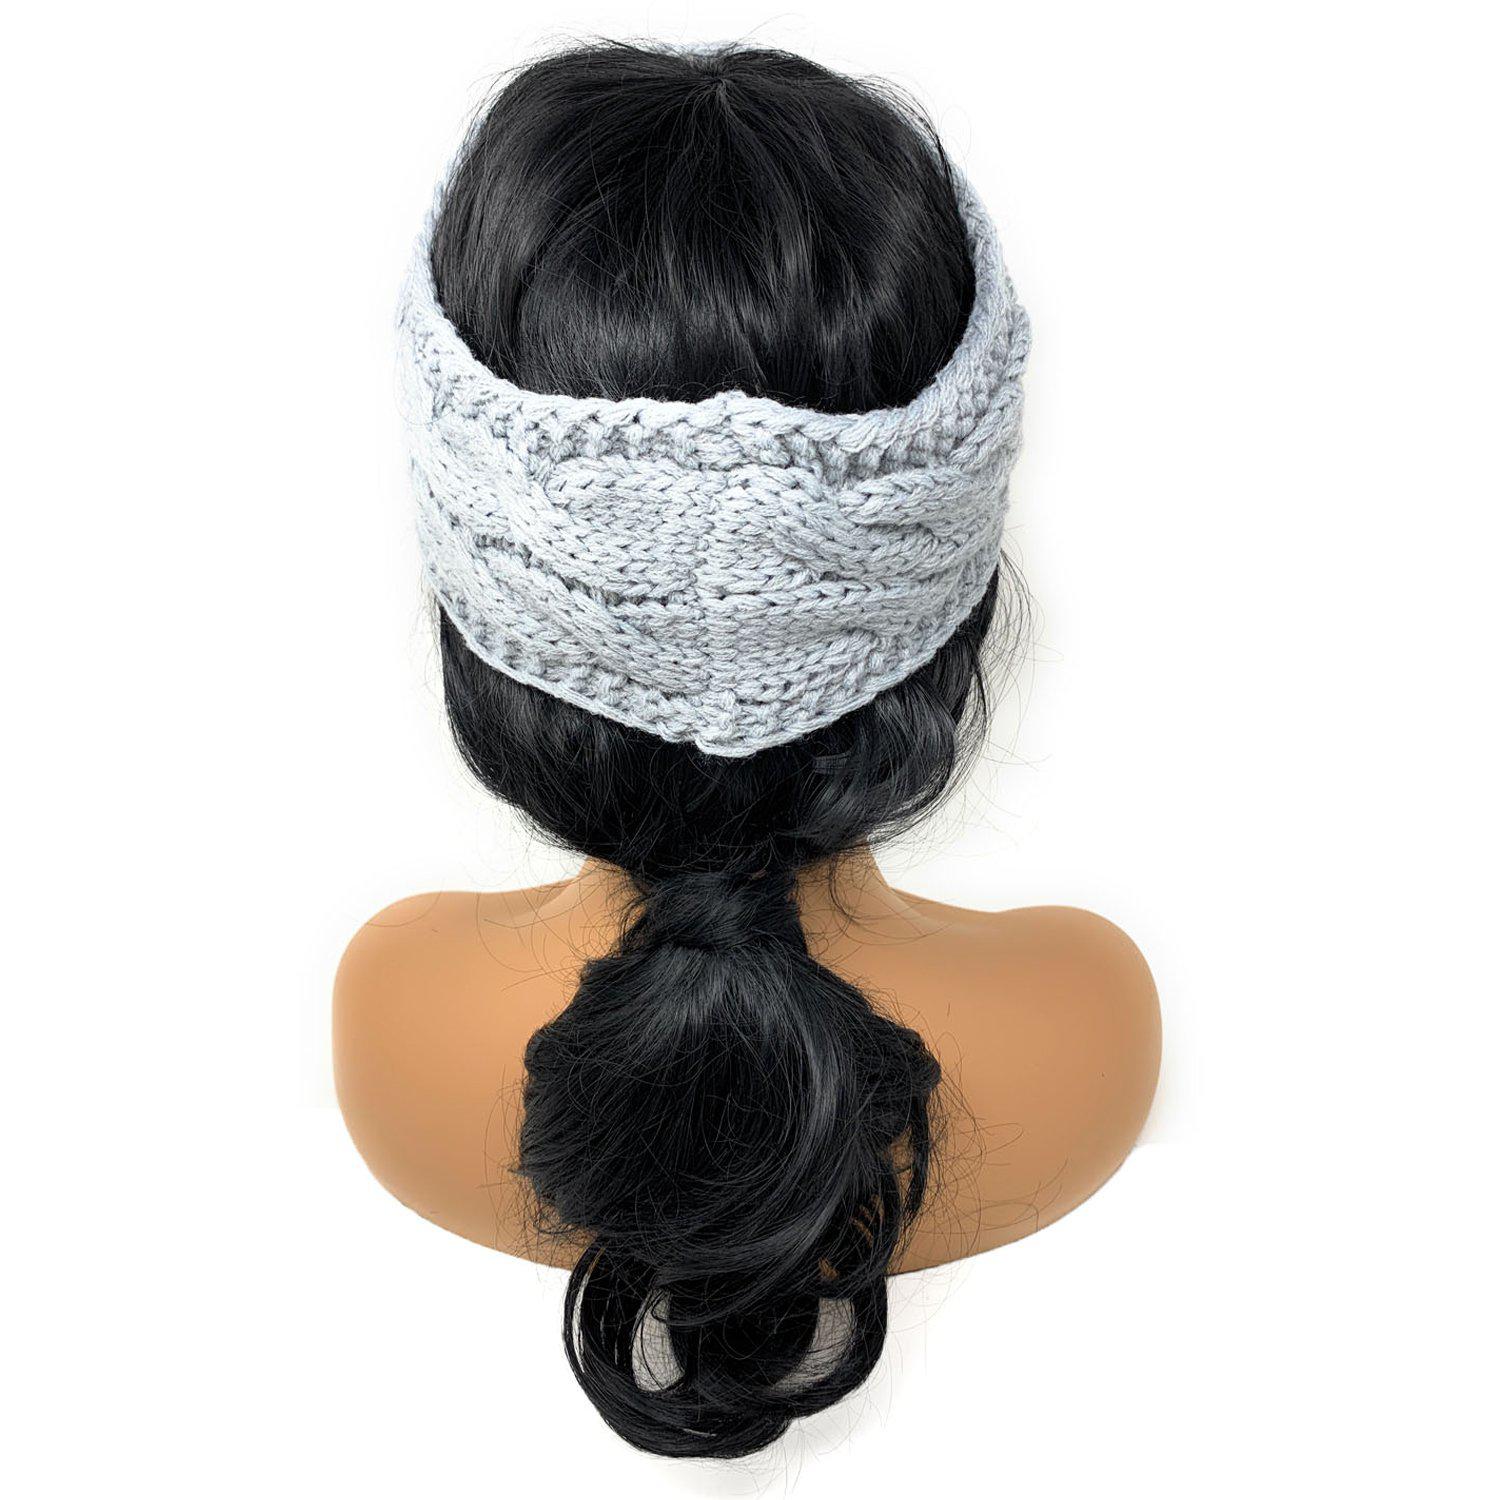 Empire Cove Reversible Headband Beanie Womens Winter Warm Solid Cable Knit-UNCATEGORIZED-Empire Cove-Black-Casaba Shop